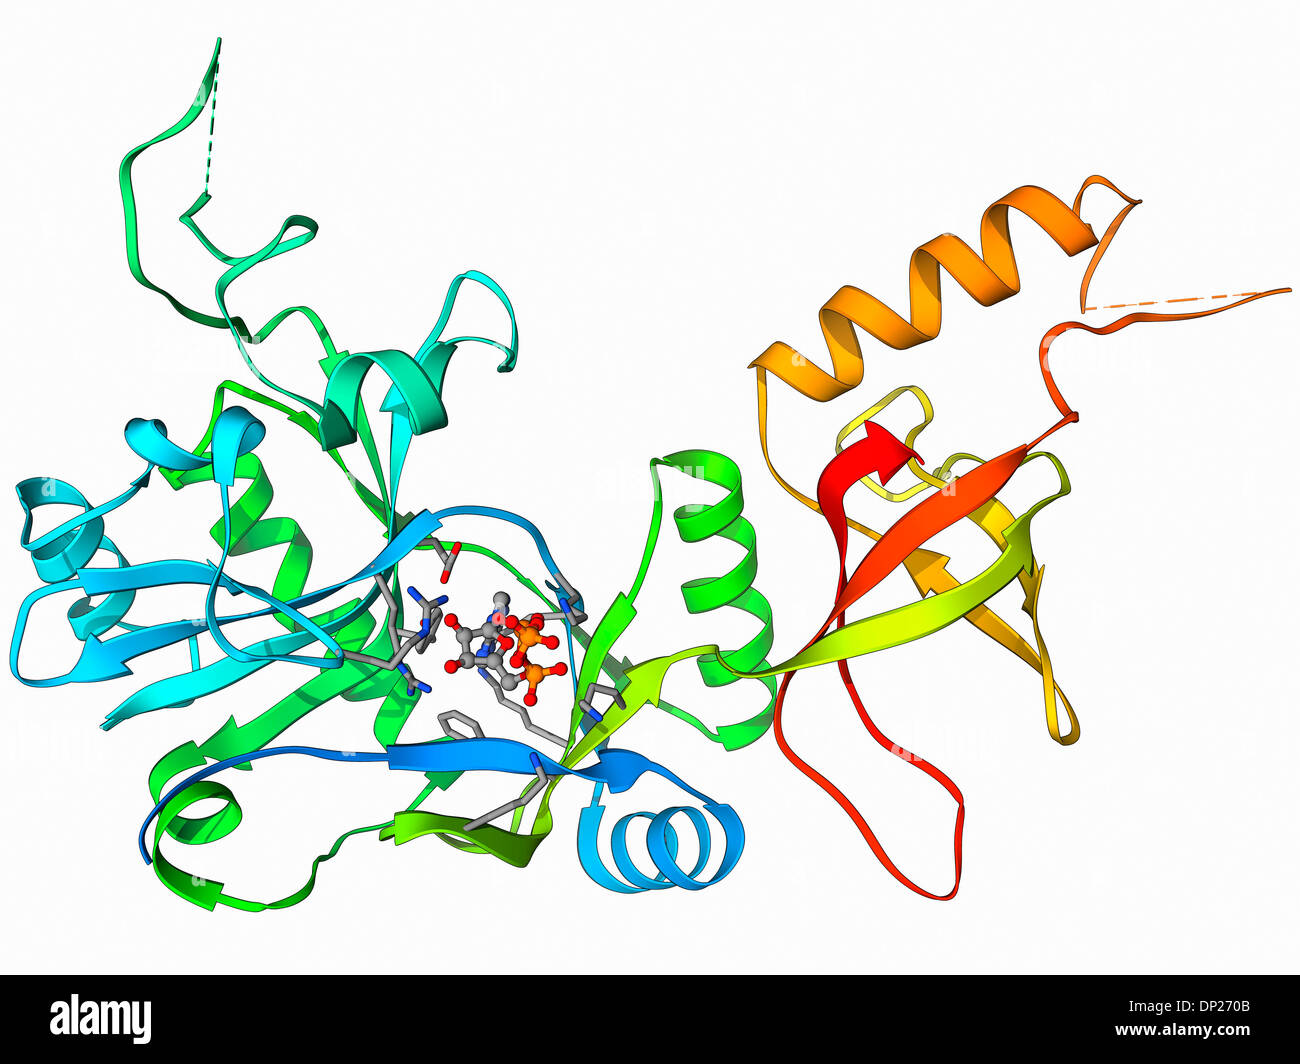 ATP-dependent DNA ligase molecule Stock Photo